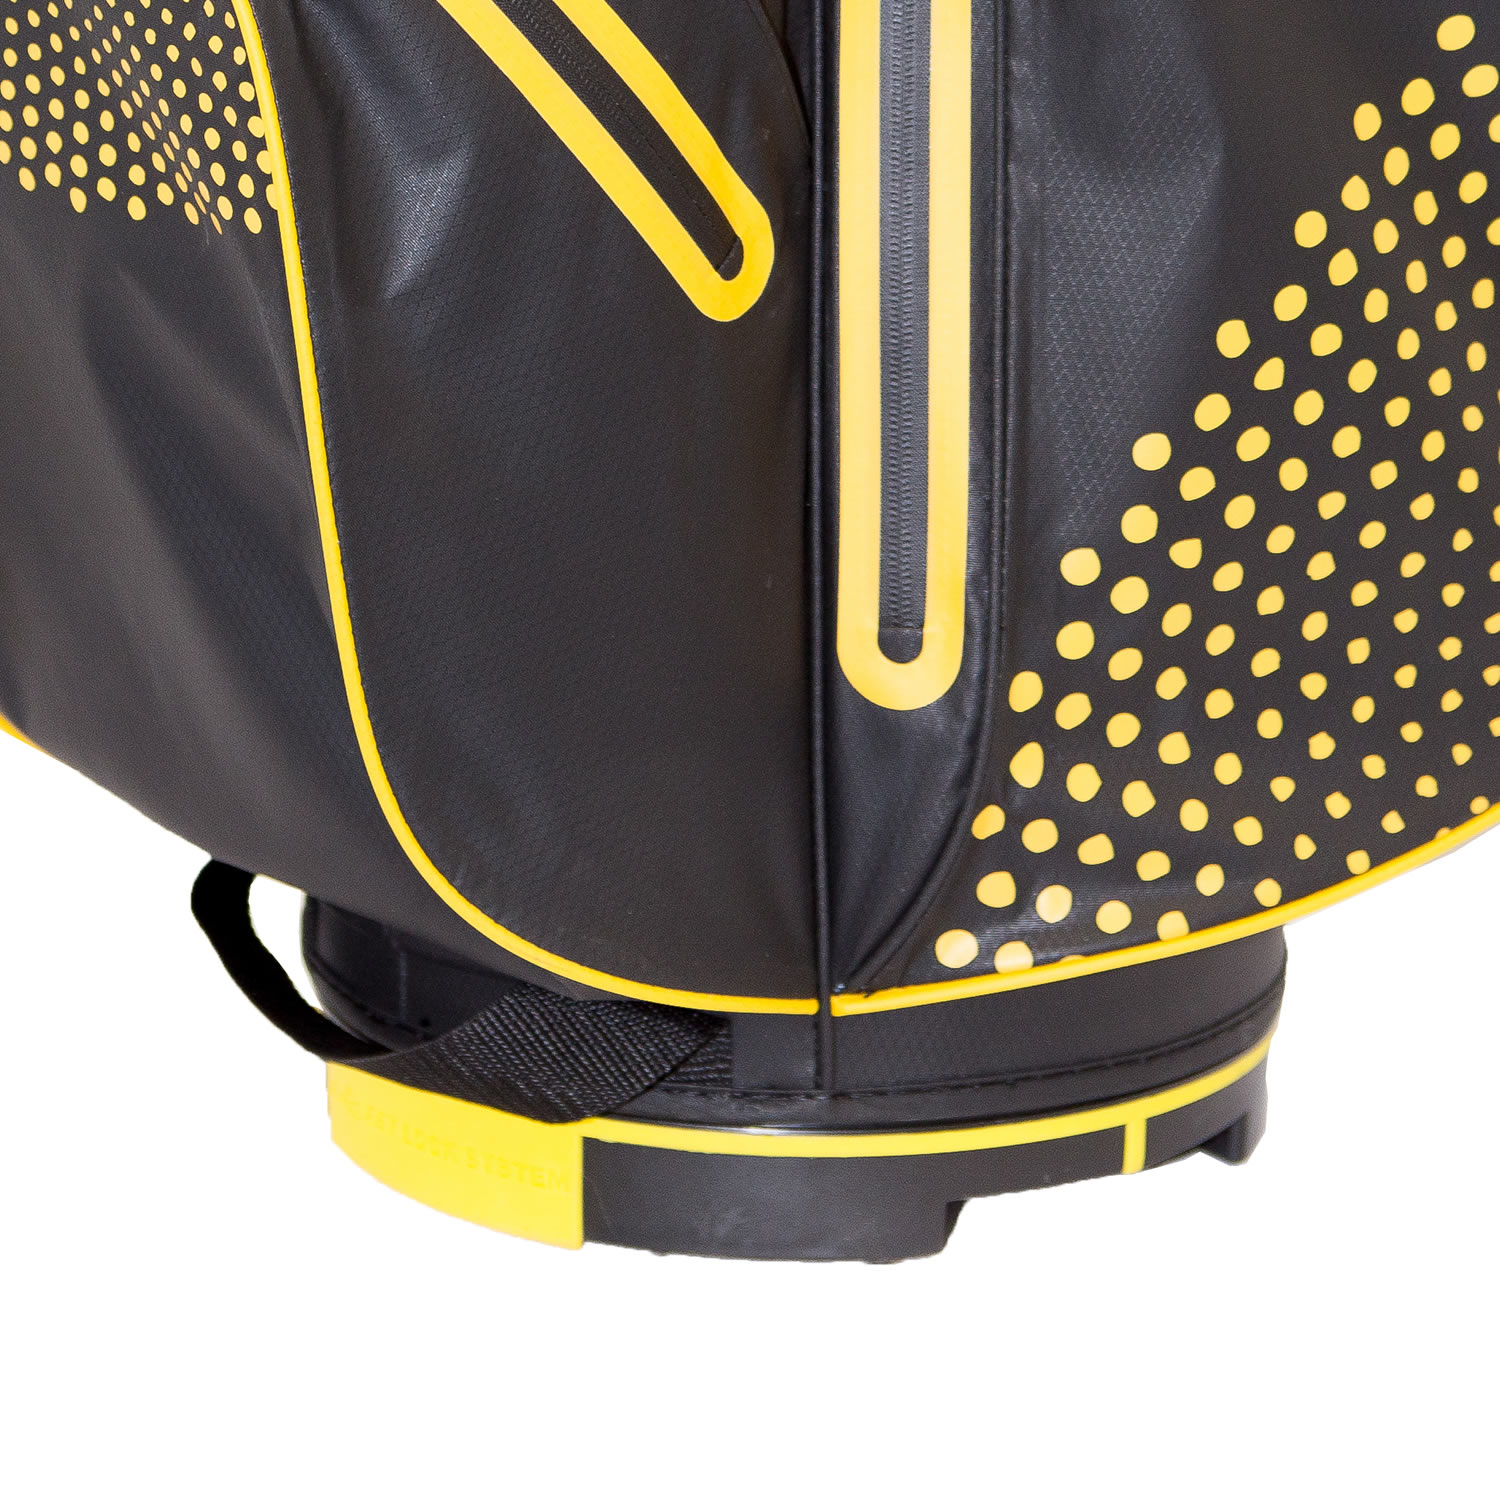 PowaKaddy 2016 Dri Edition Waterproof Golf Cart Bag Black/Yellow | Scottsdale Golf